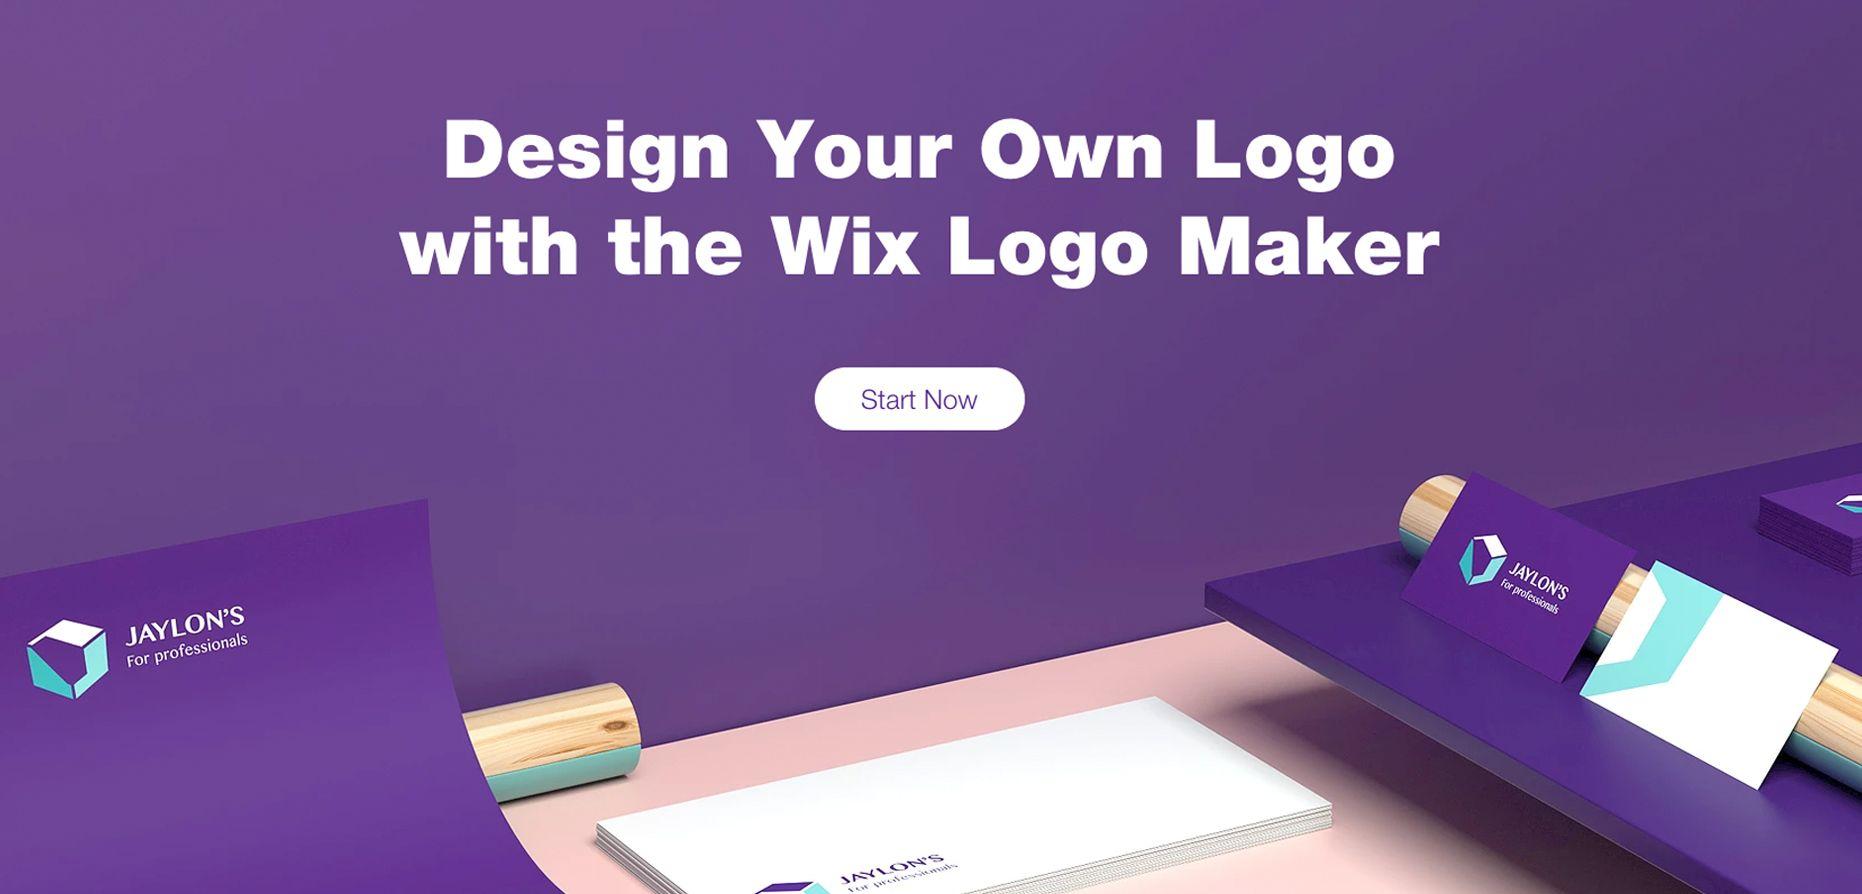 Design Your Own Logo - Logo Maker | Create Your Own Free Logo | Wix.com